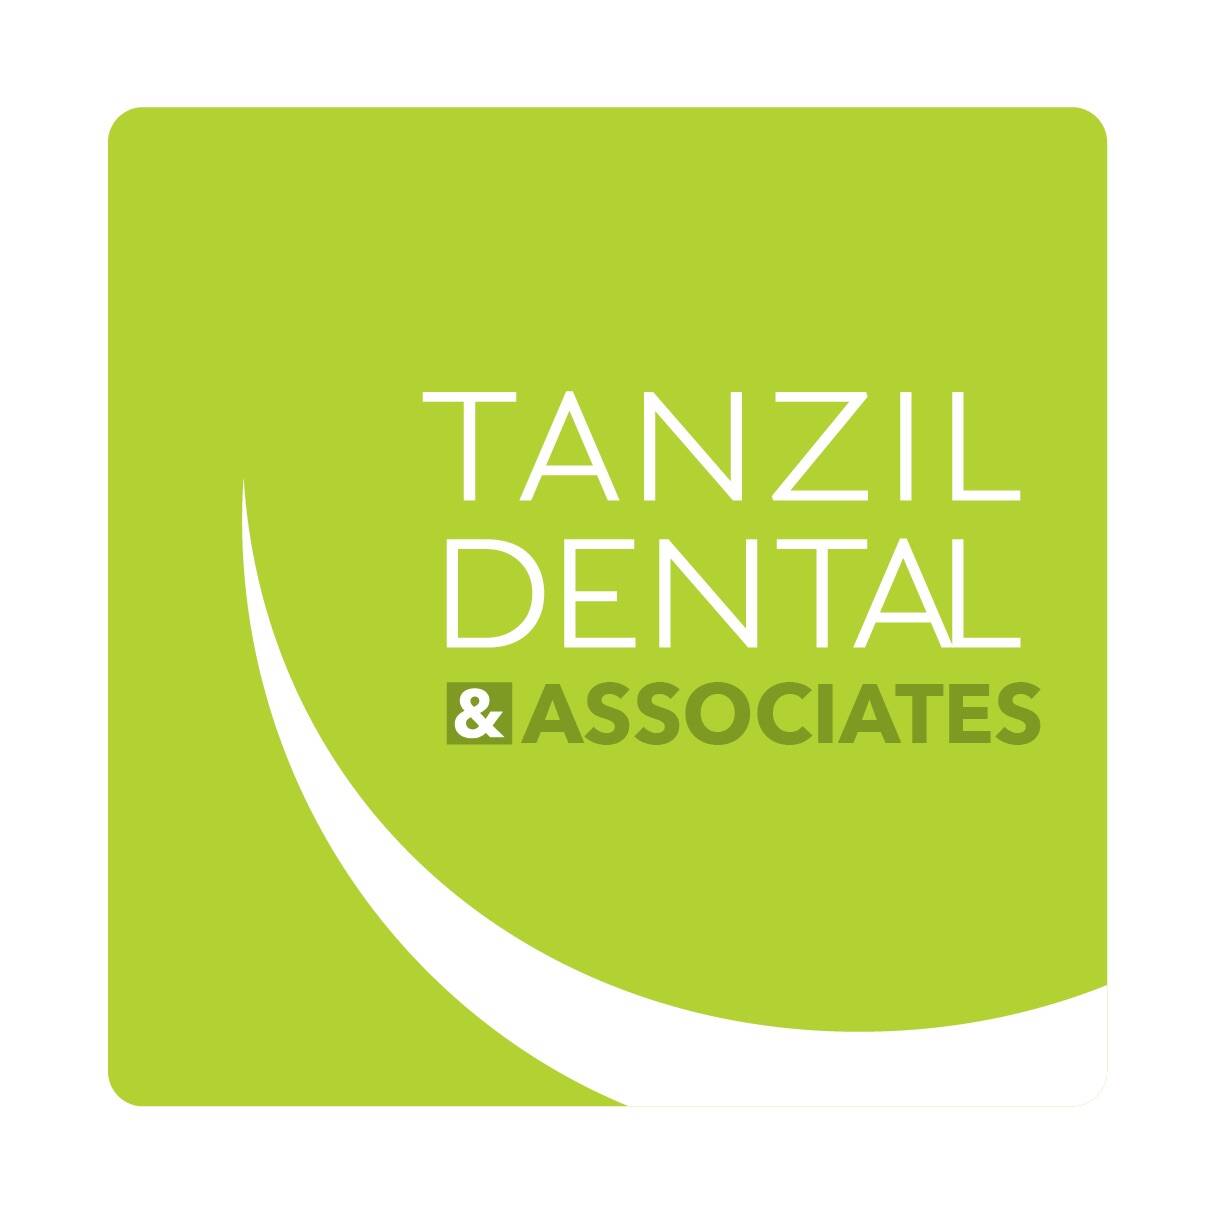 Tanzil Dental